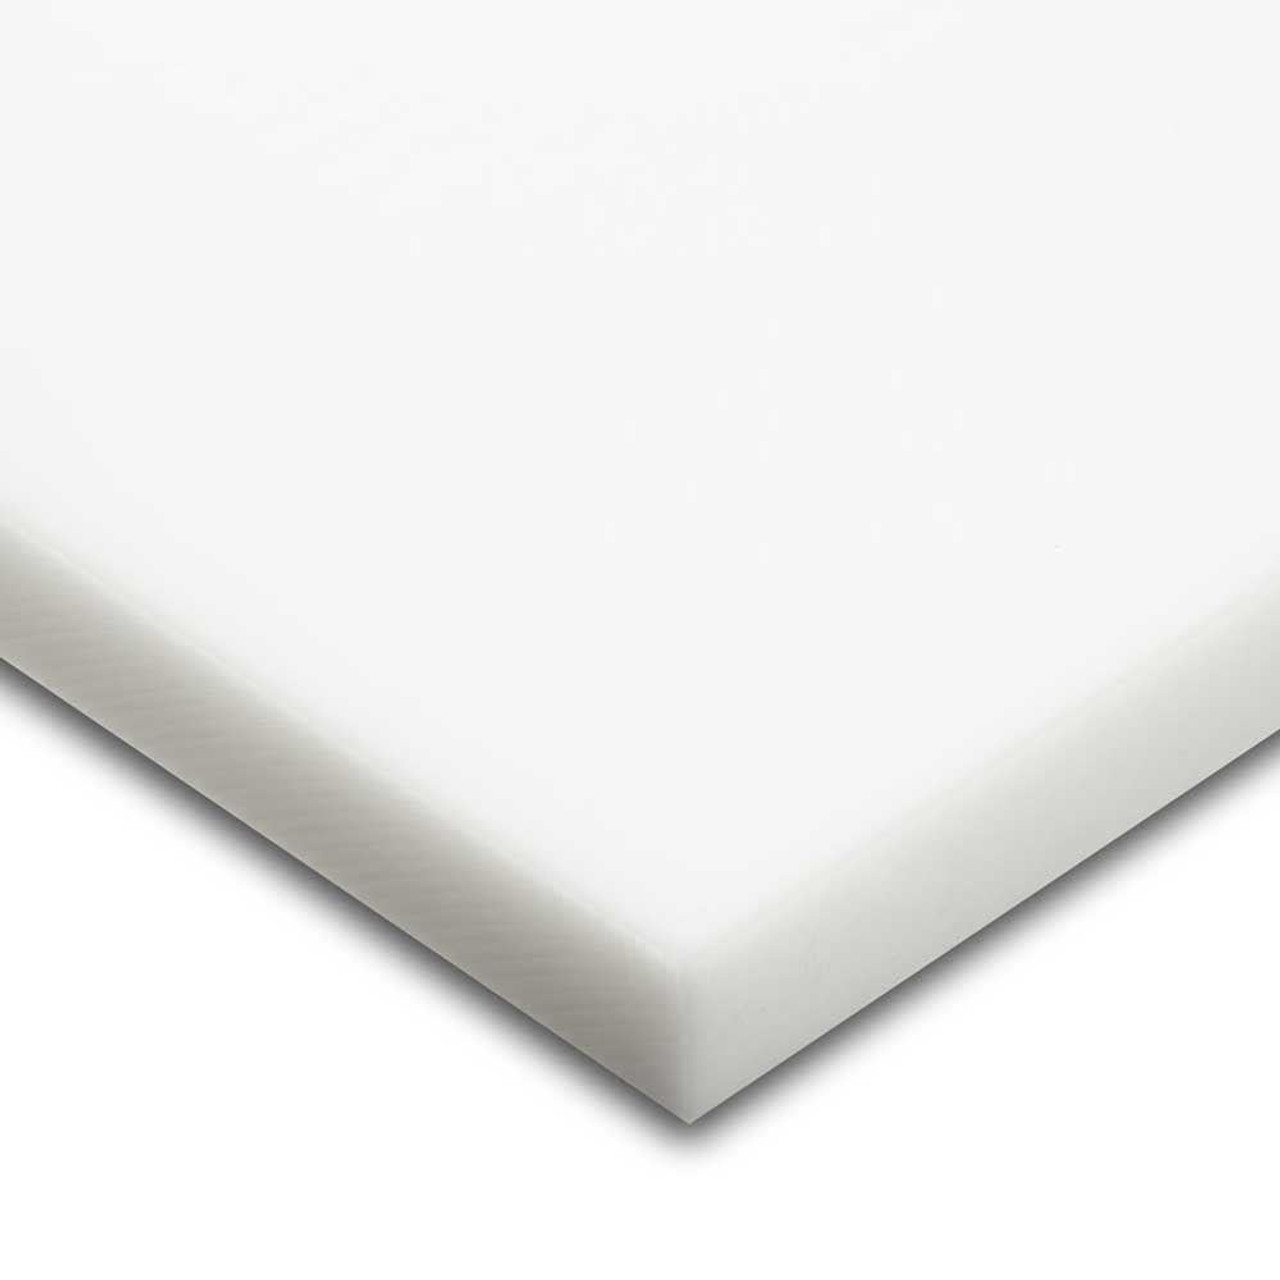 2" x 3" x 10", Acetal Plastic Sheet, White